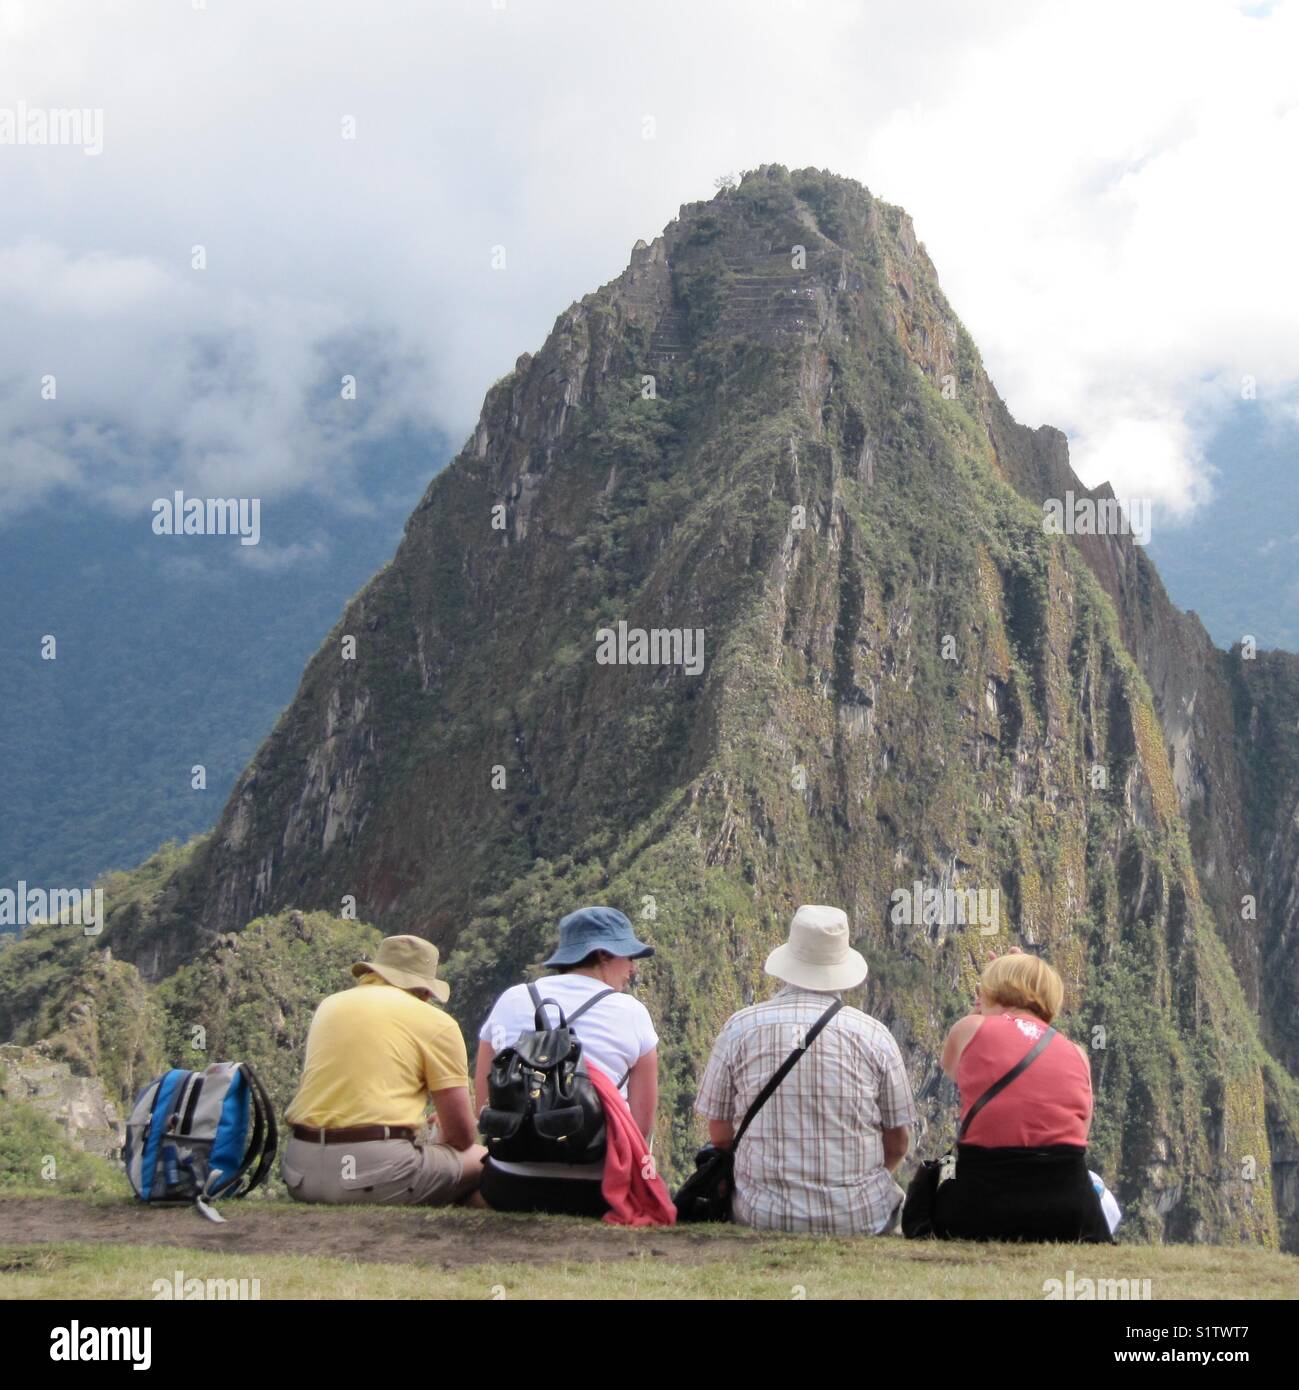 Baby boomers traveling world, enjoying retirement. Senior couples sitting viewing scenic mountain views - Machu Picchu, Peru Stock Photo